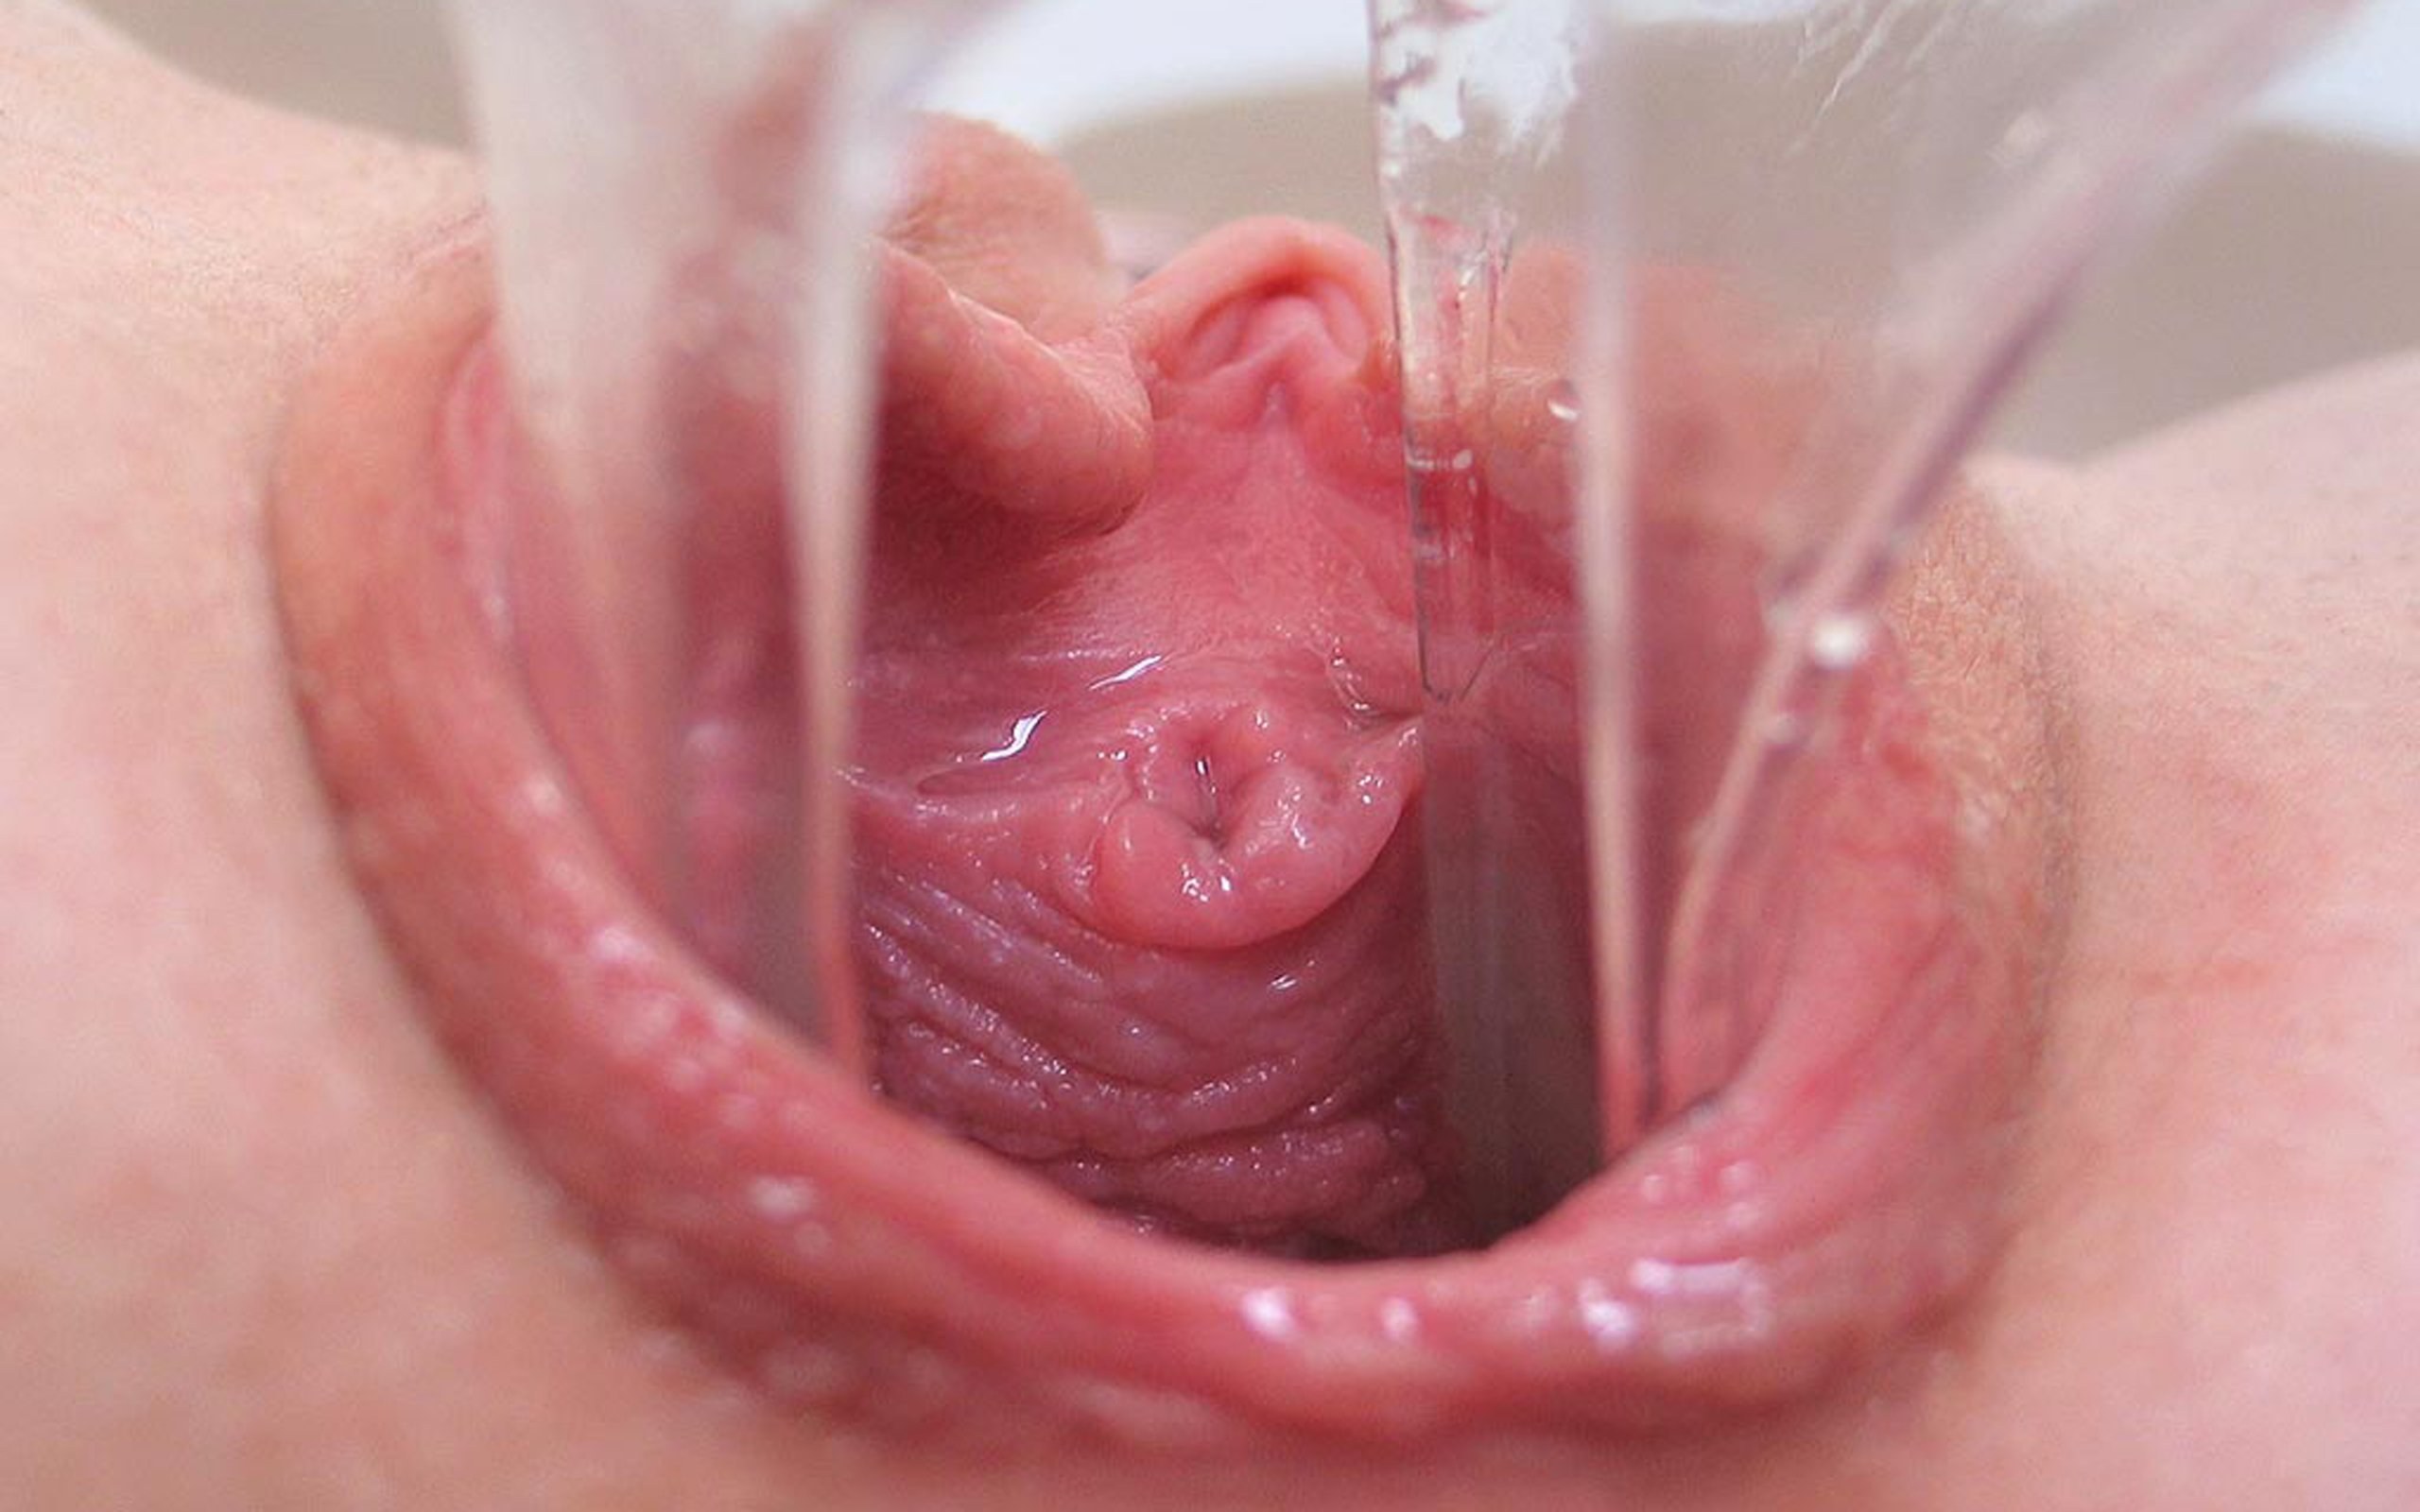 камера внутри влагалище во время оргазма фото 6